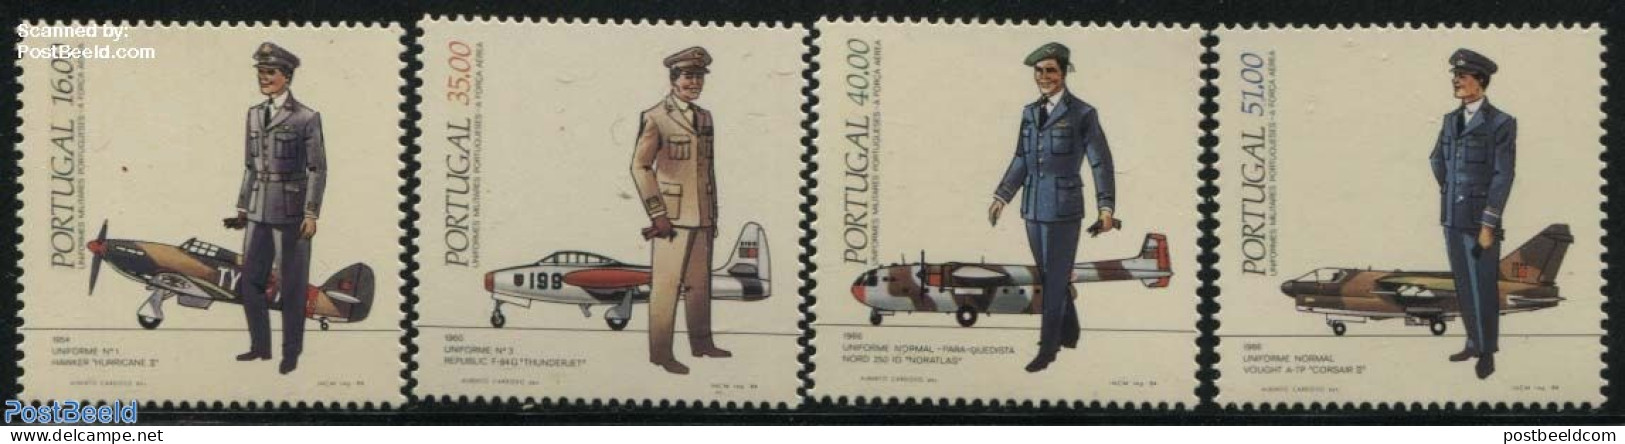 Portugal 1984 Uniforms & Aeroplanes 4v, Mint NH, Transport - Various - Aircraft & Aviation - Uniforms - Nuovi